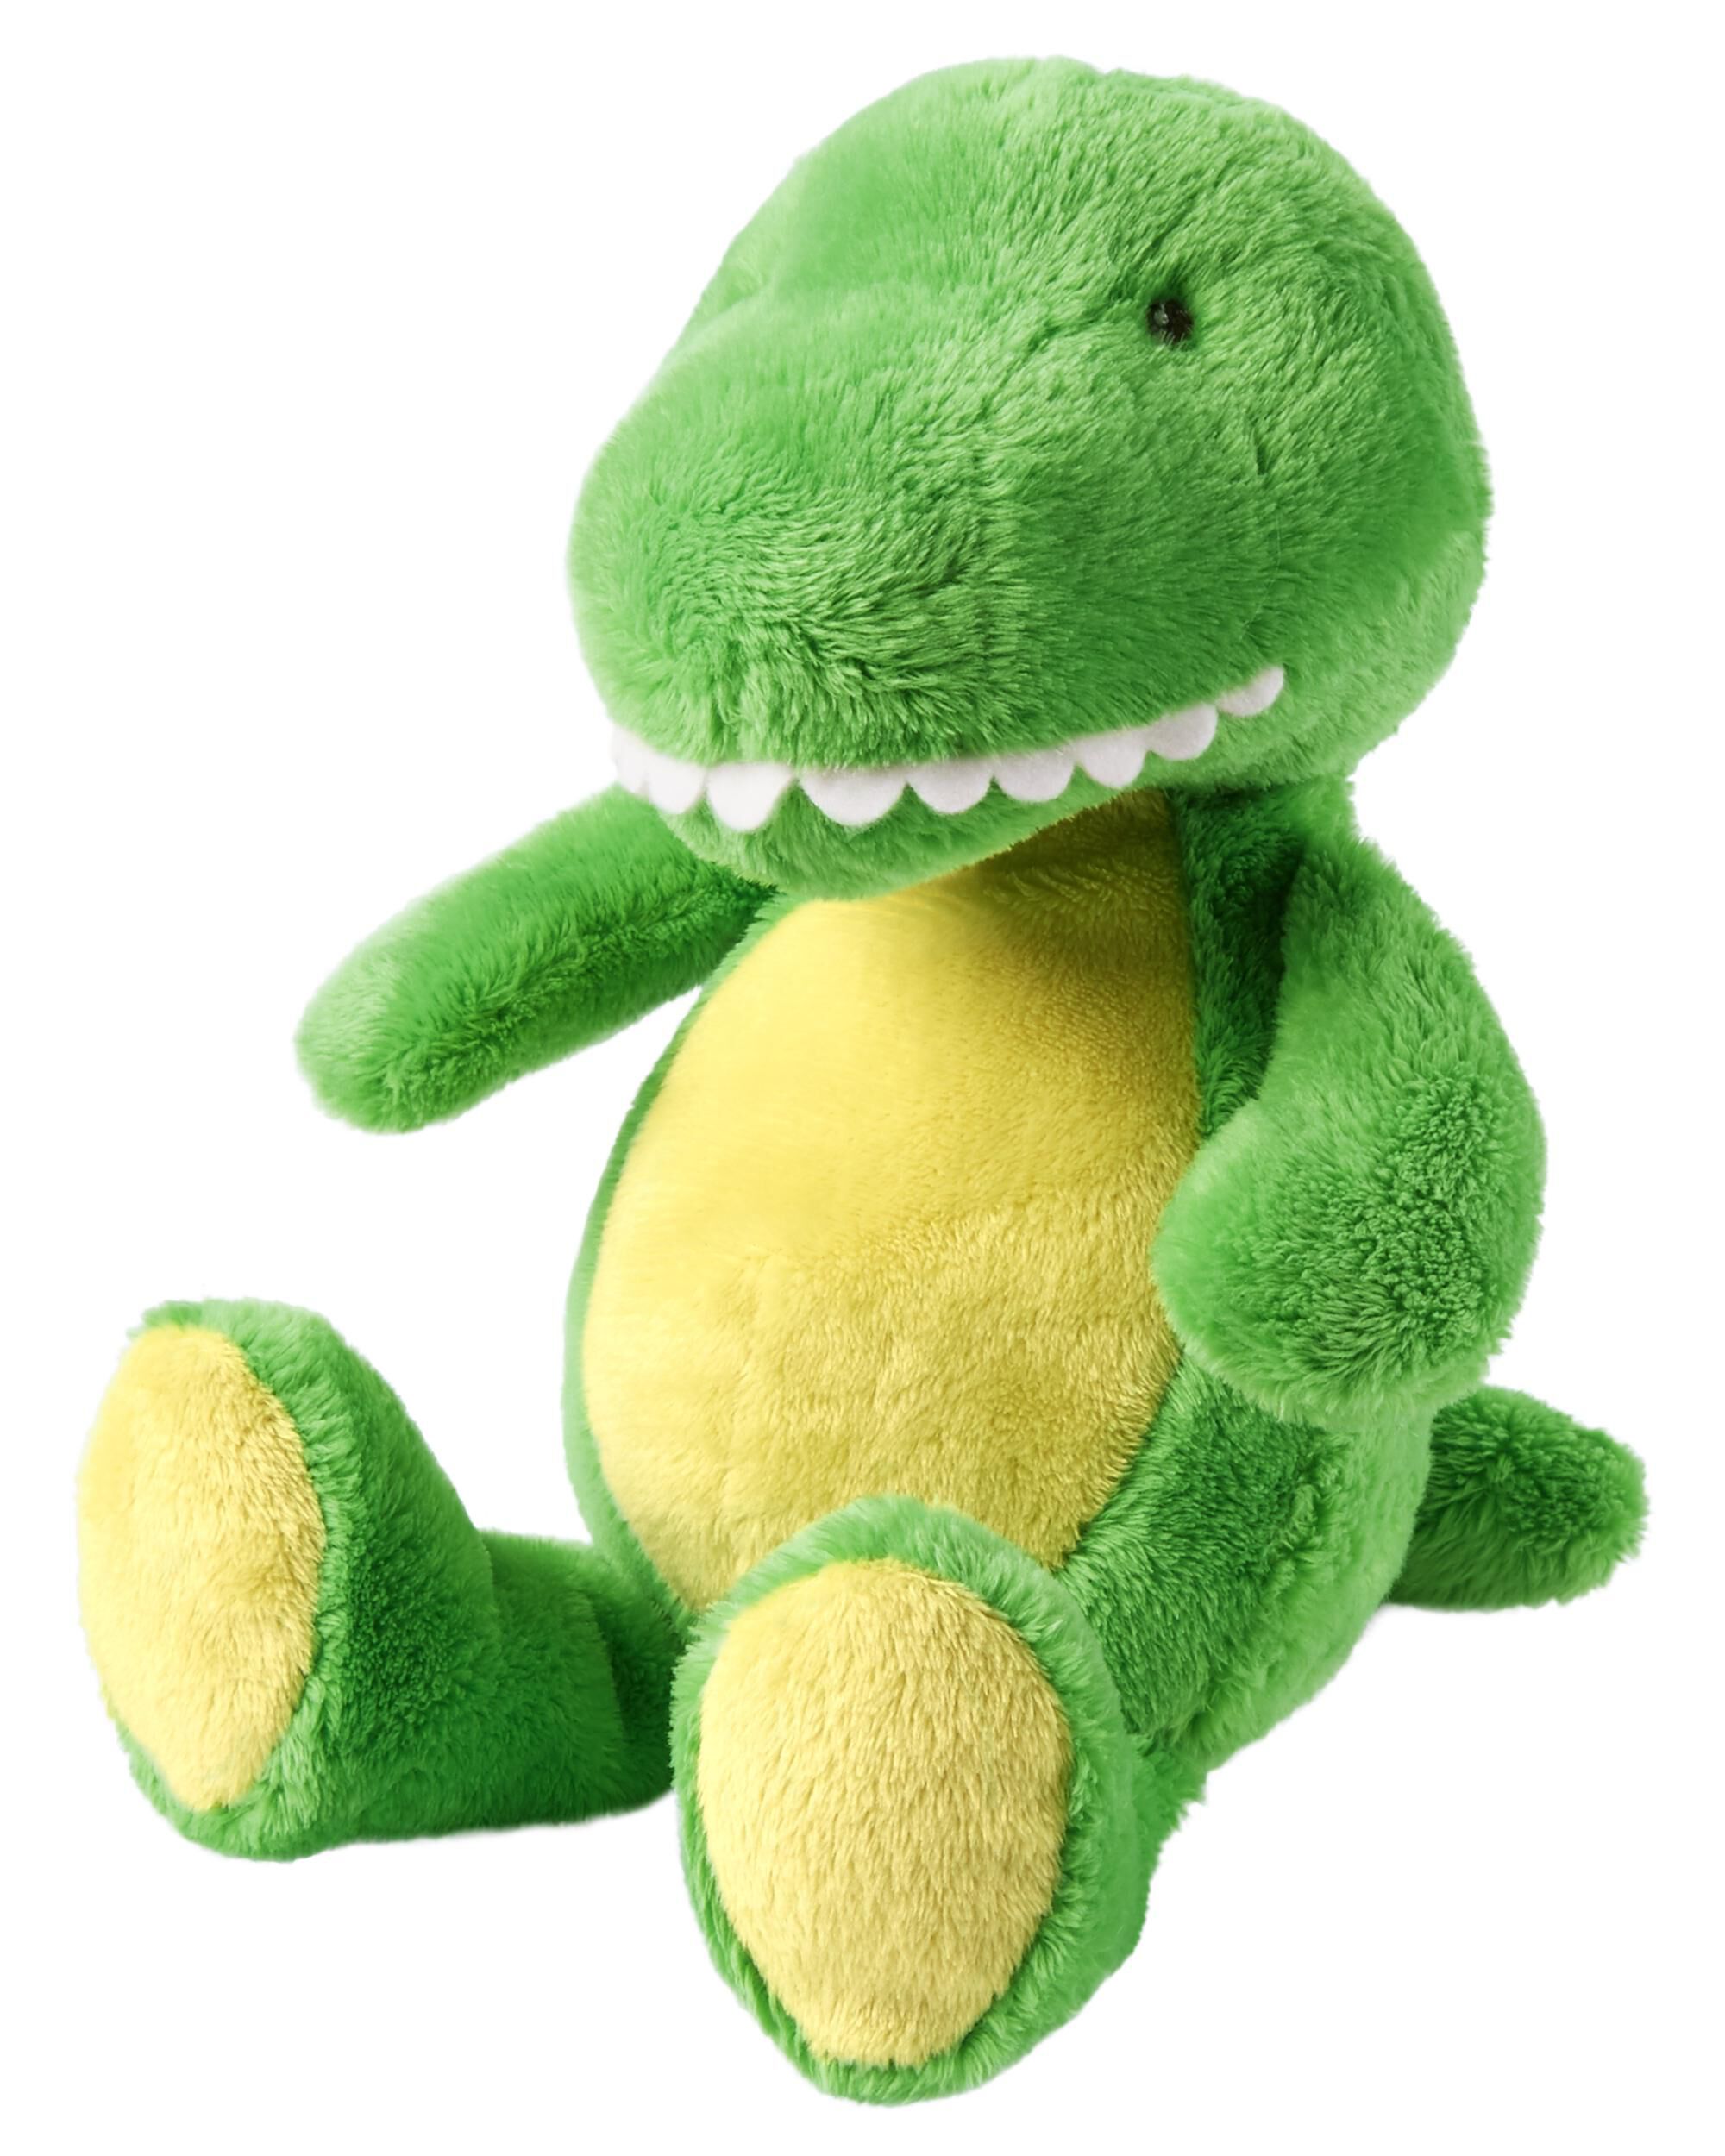 carter's dinosaur stuffed animal